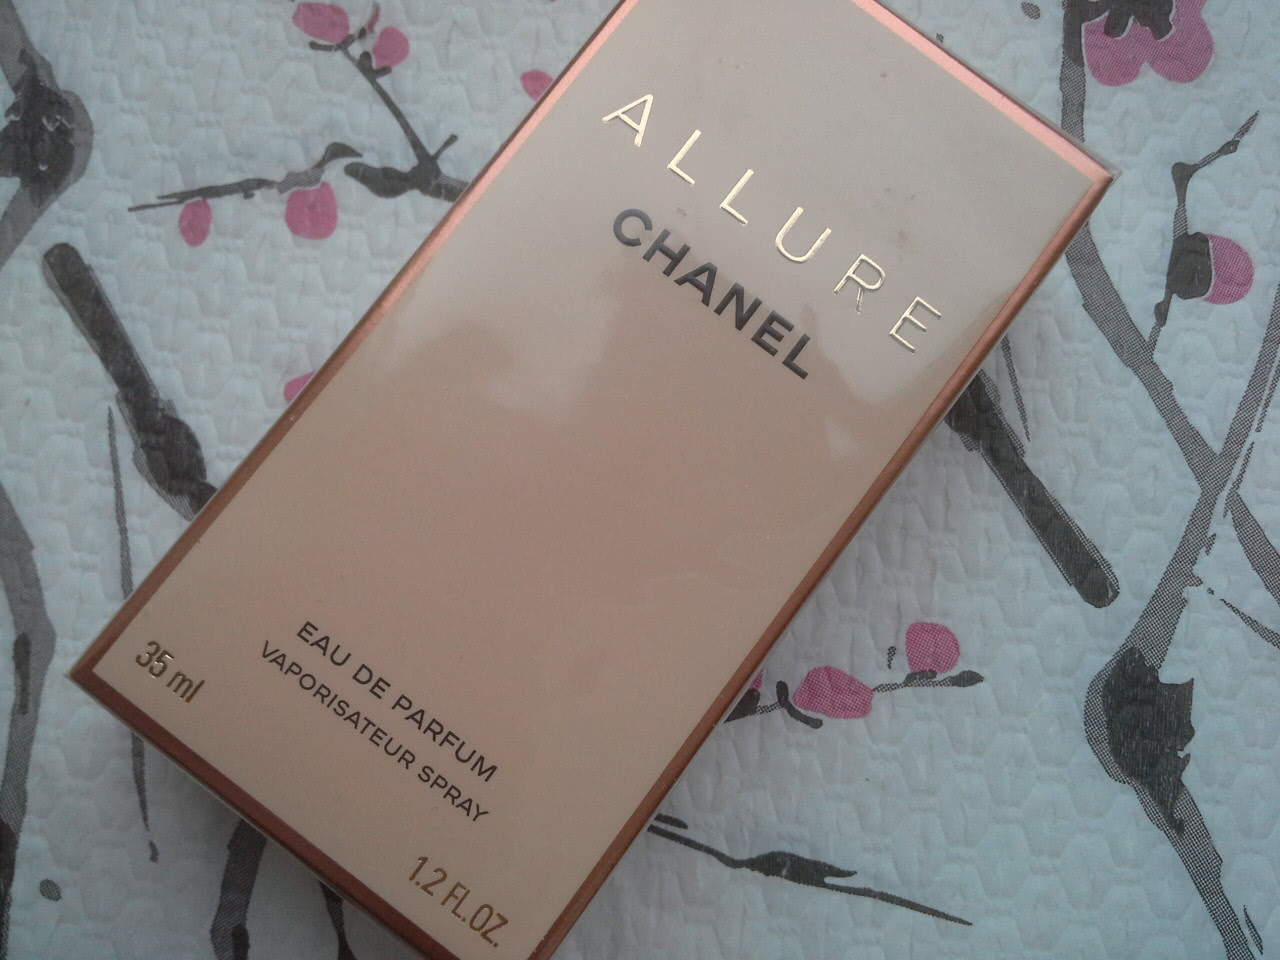 Chanel Allure edp 35ml